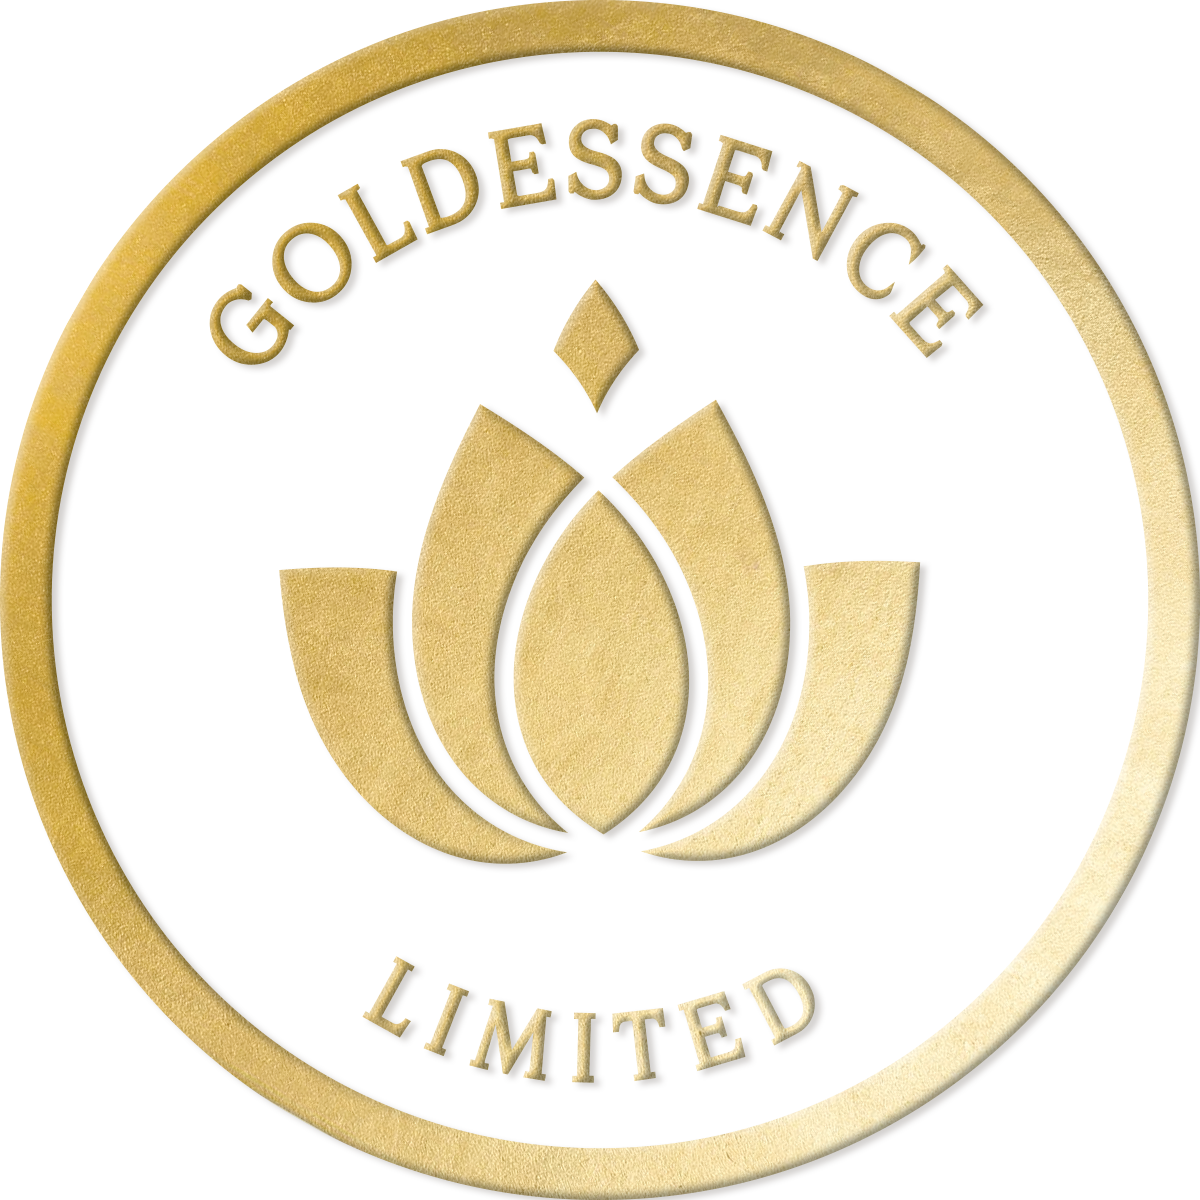 Goldessence Limited